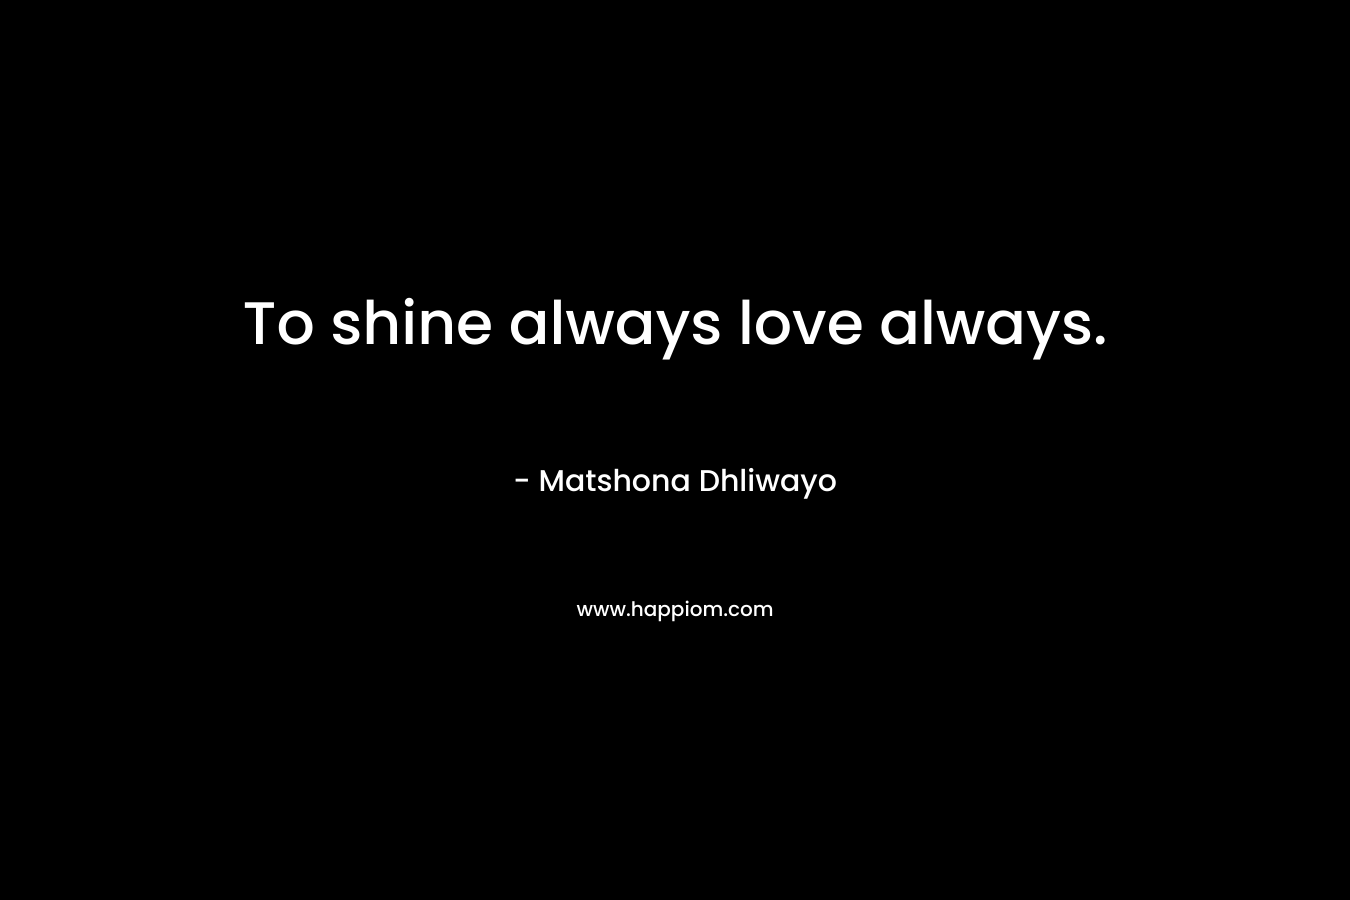 To shine always love always.